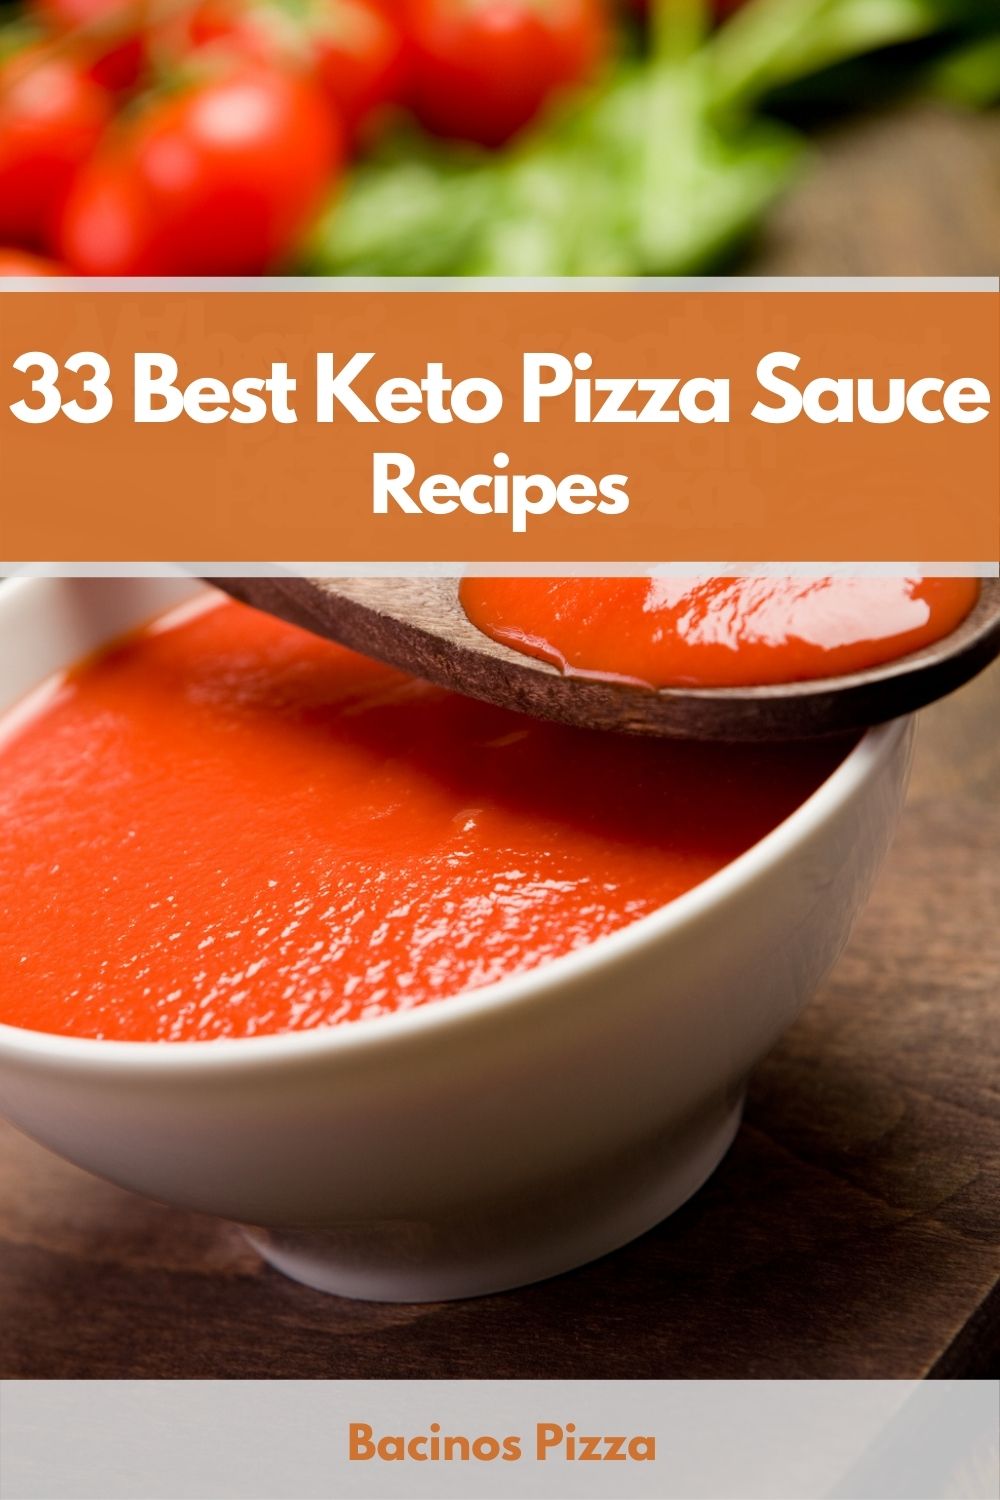 33 Best Keto Pizza Sauce Recipes pin